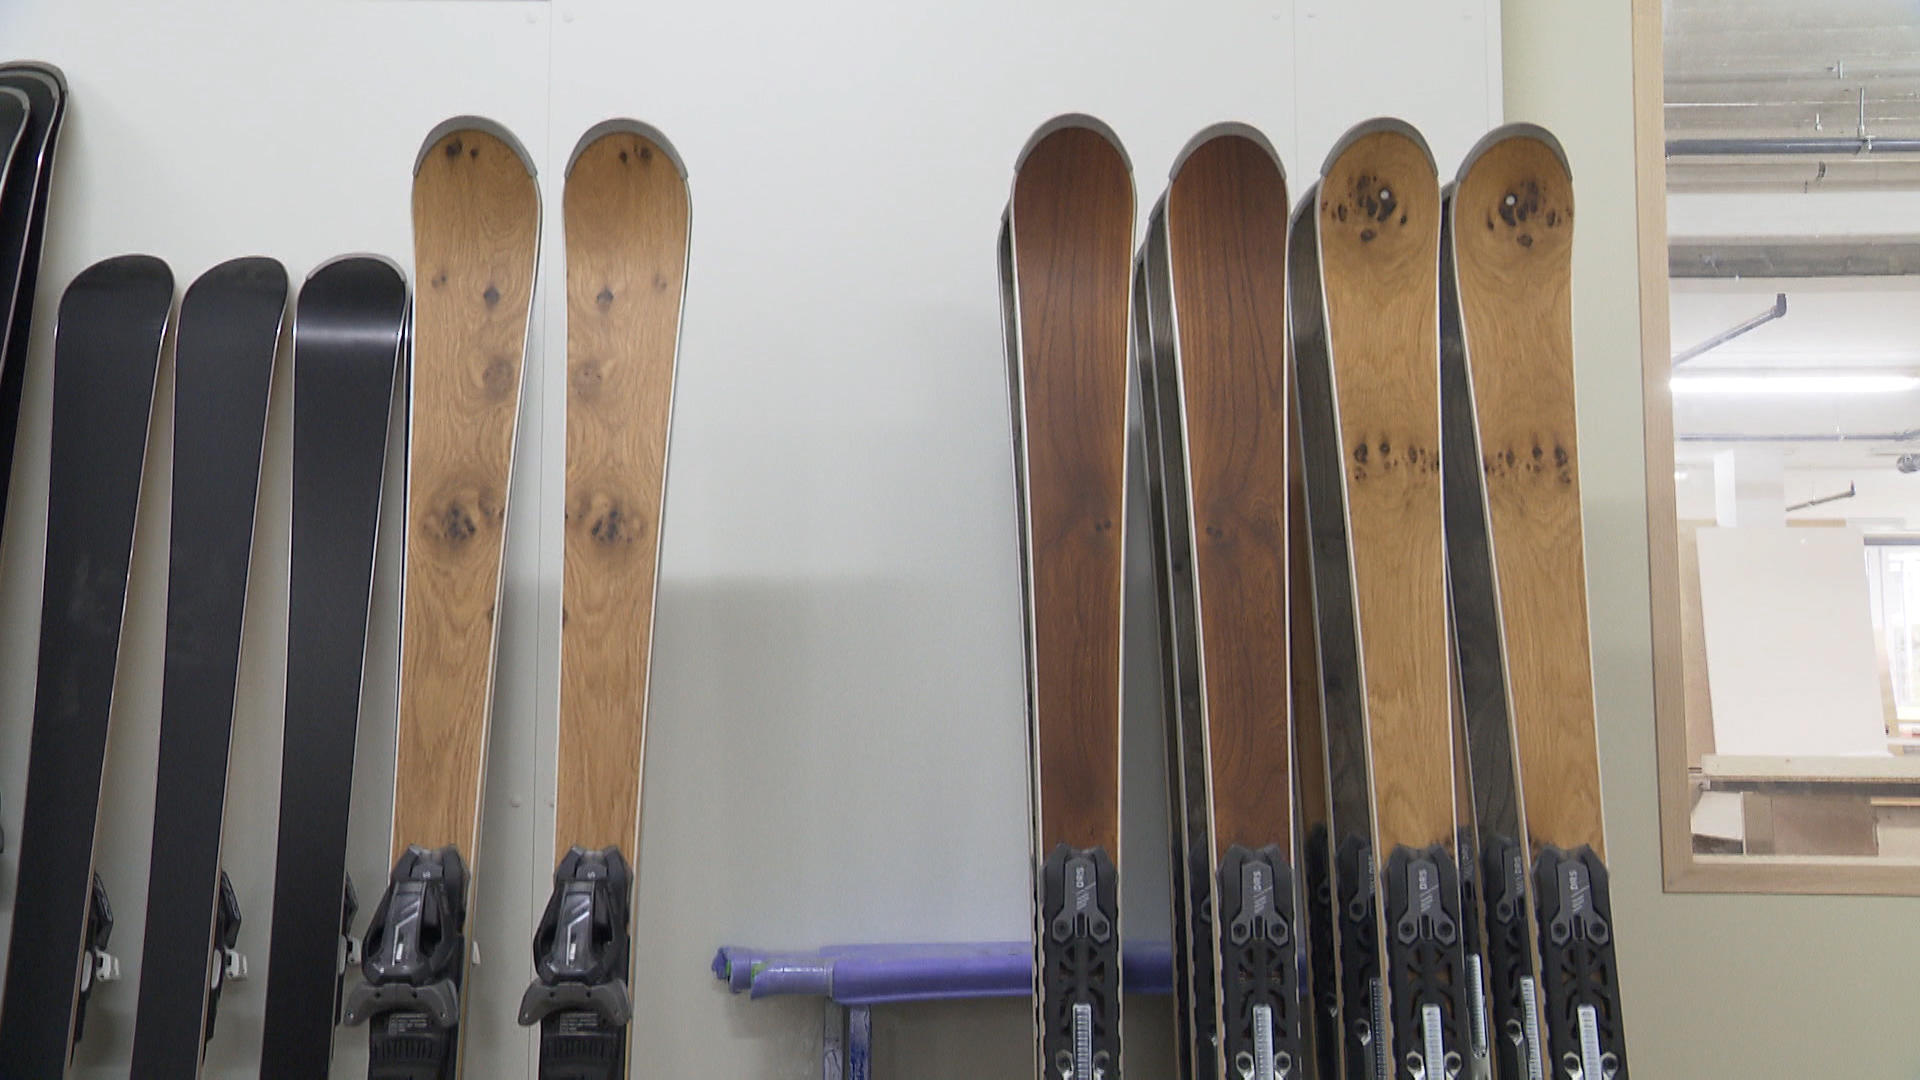 Skis “made in Switzerland